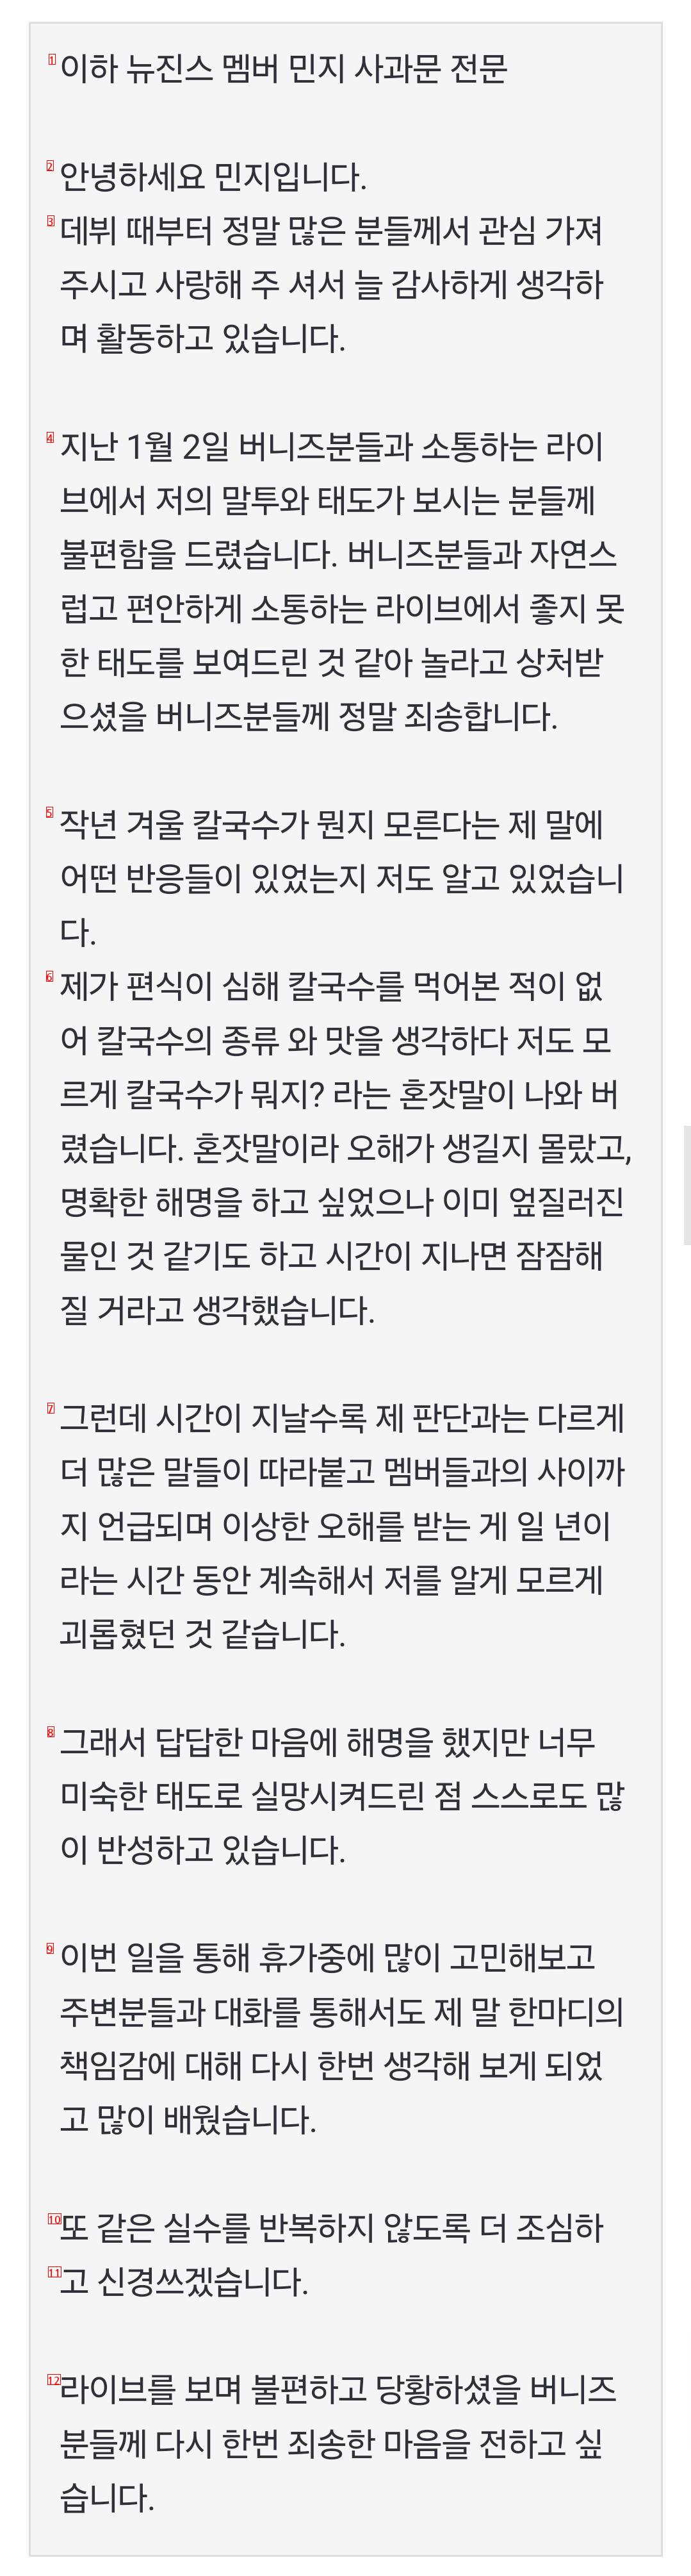 New Jin's Minji Kalguksu Apology Statement